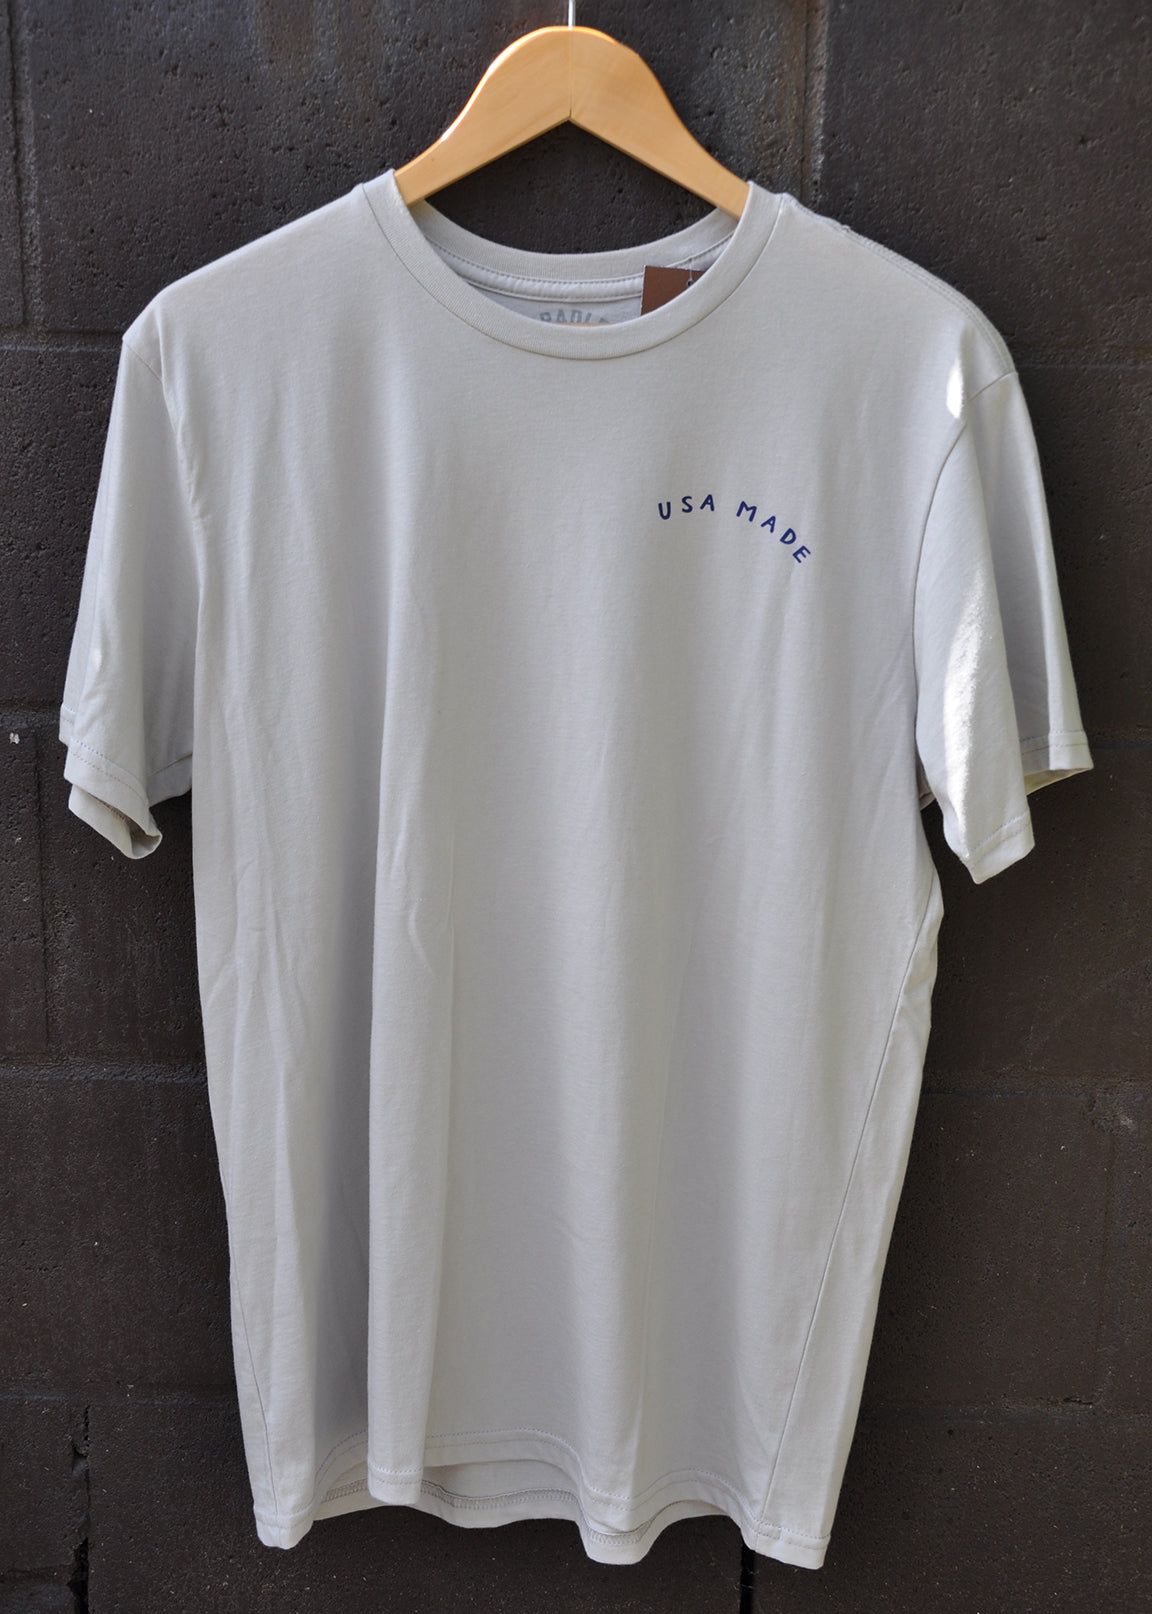 Tee "Bradley Mountain" Knit Shirt 10202 M